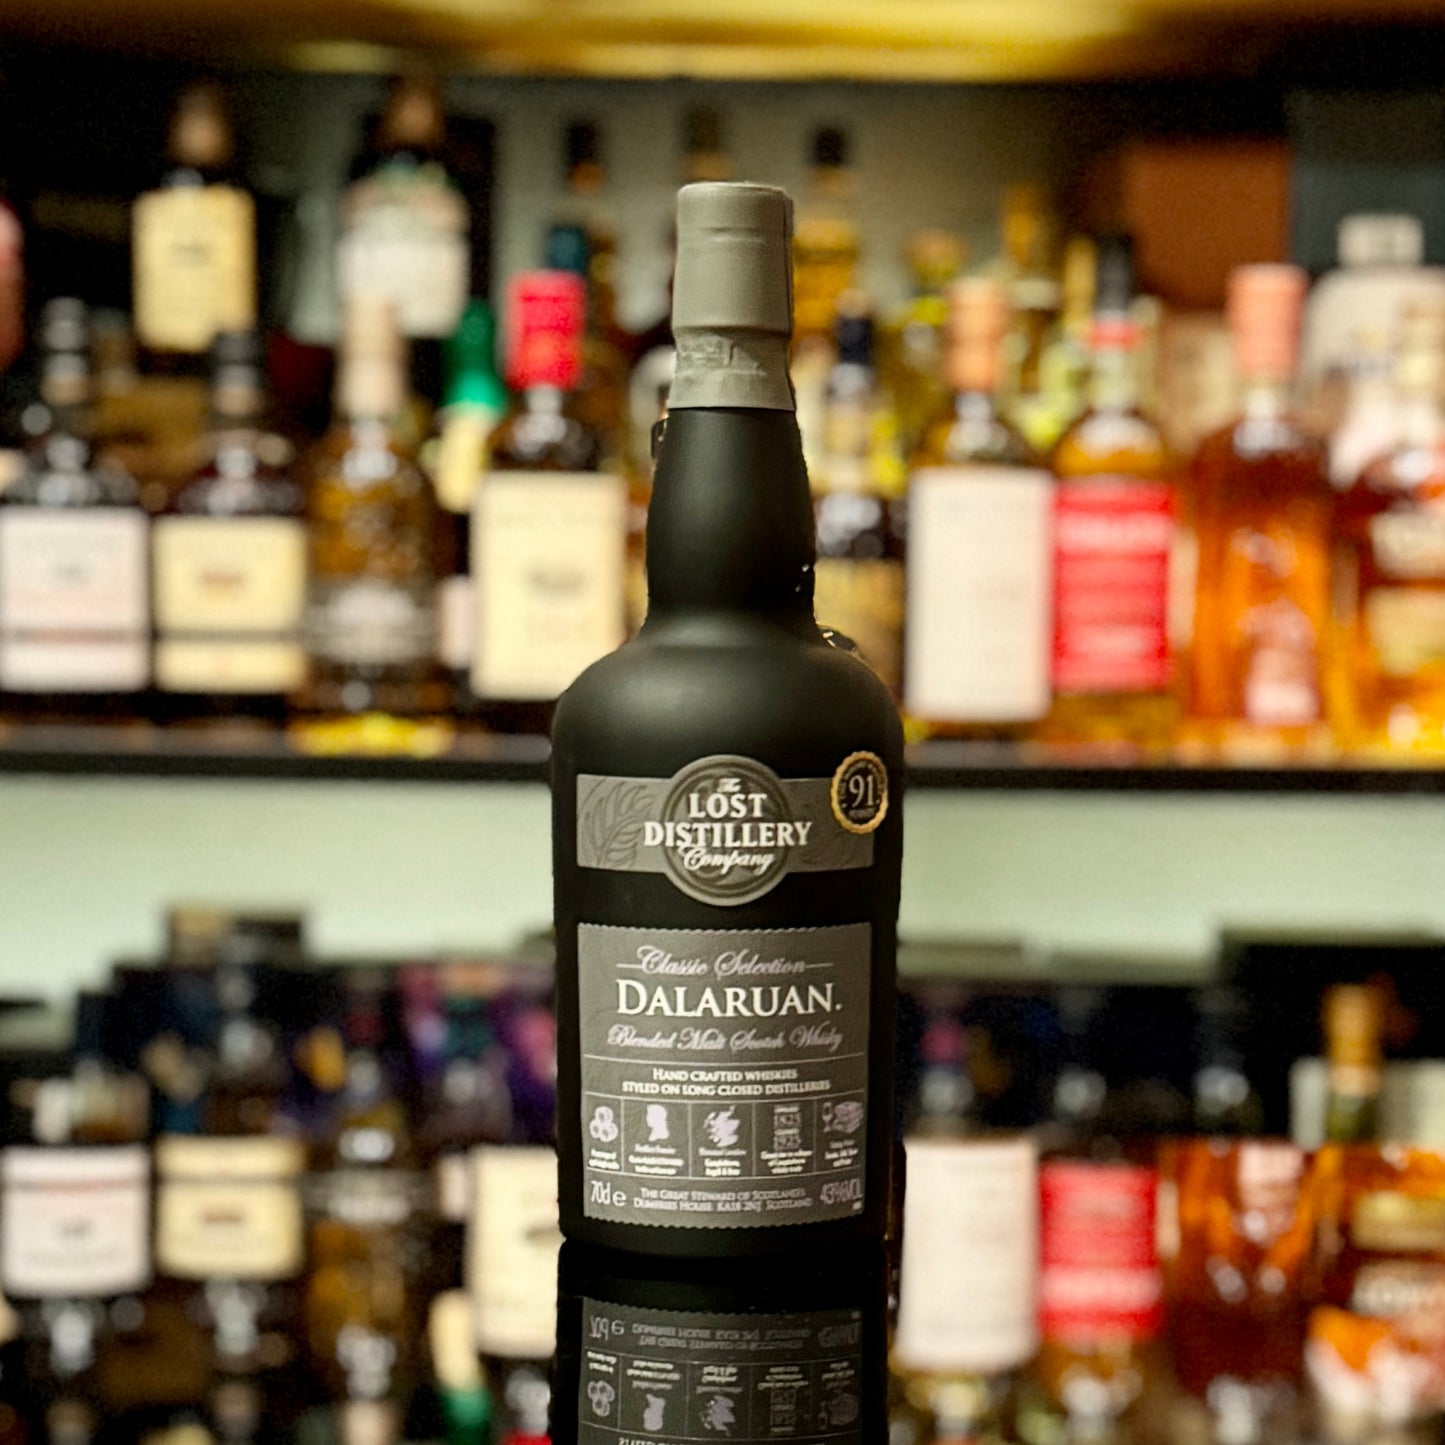 The Lost Distillery Dalaruan Blended Malt Scotch Whisky